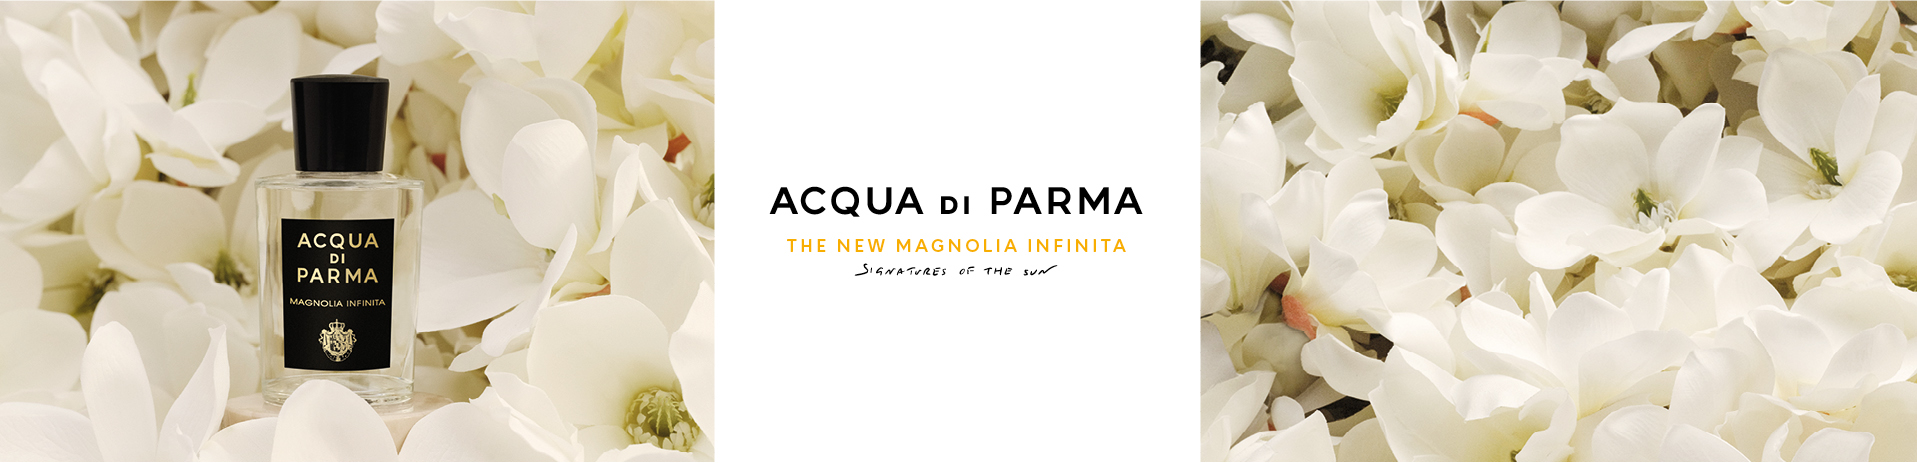 Comprar Acqua di Parma Online | Acqua di Parma